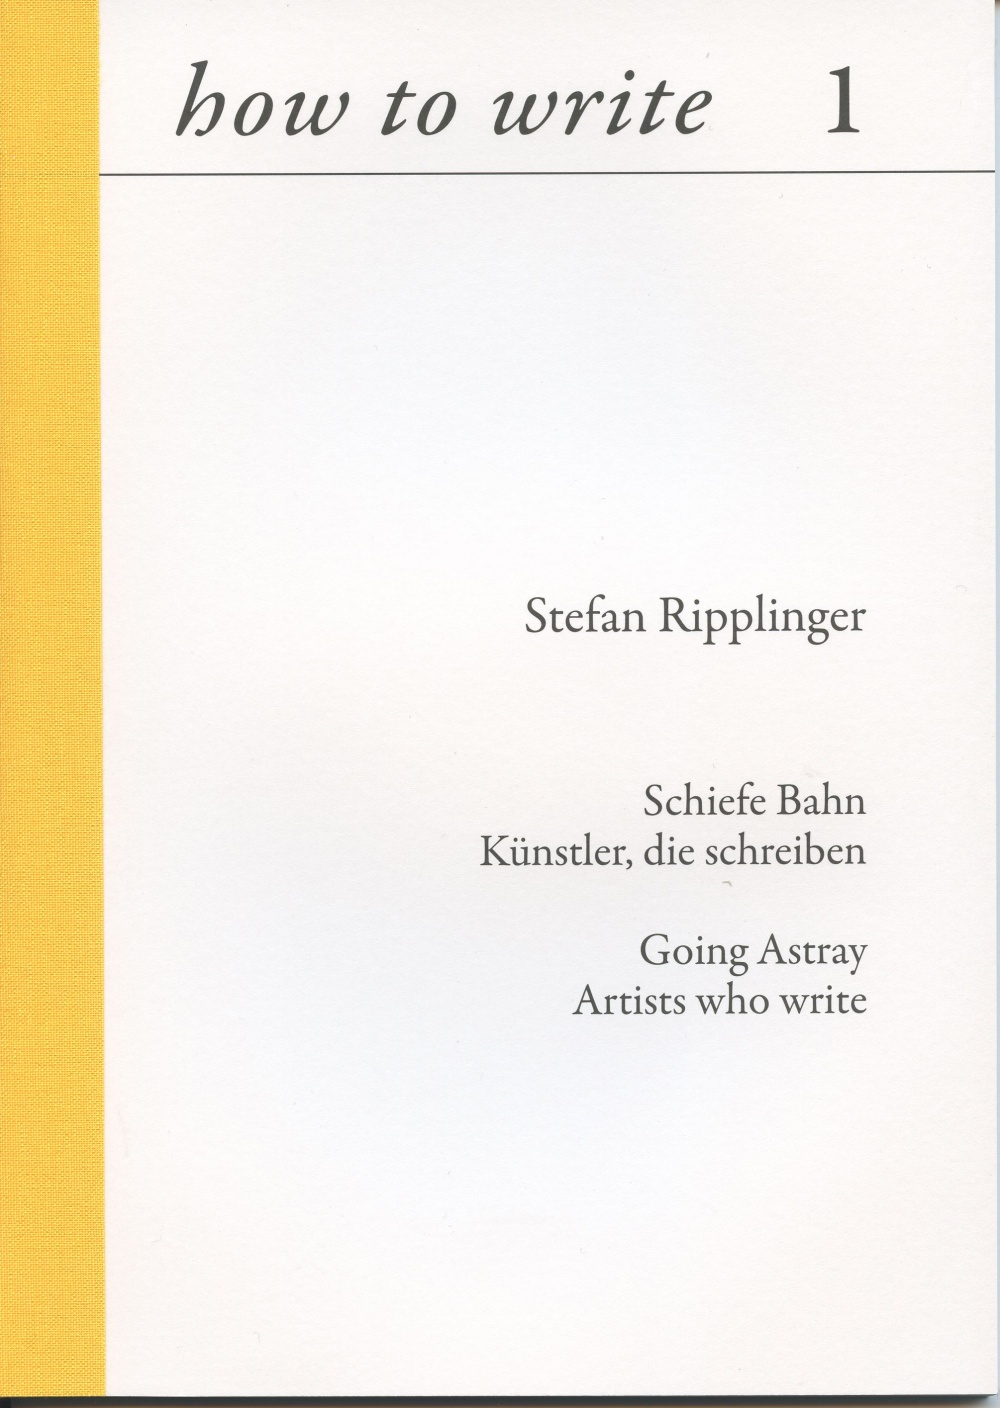 how to write I 

Stefan Ripplinger, Schiefe Bahn – Künstler, die